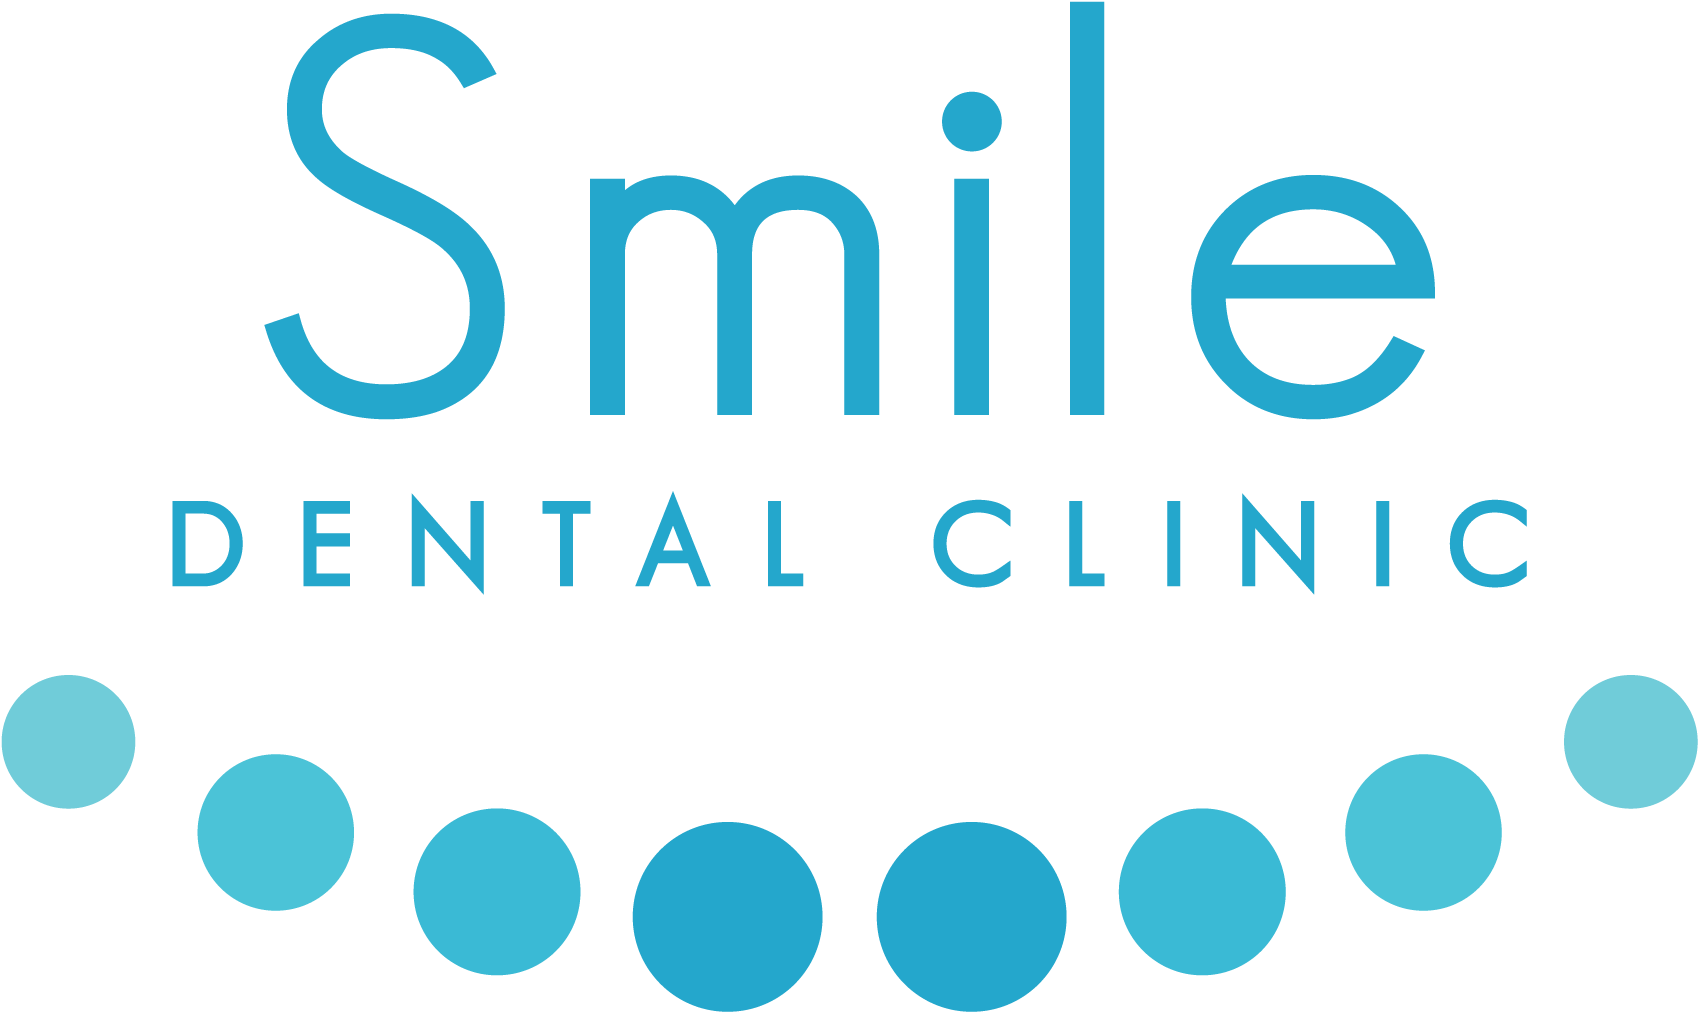 5 Dental Logos That Will Brighten Your Smile - crowdspring Blog